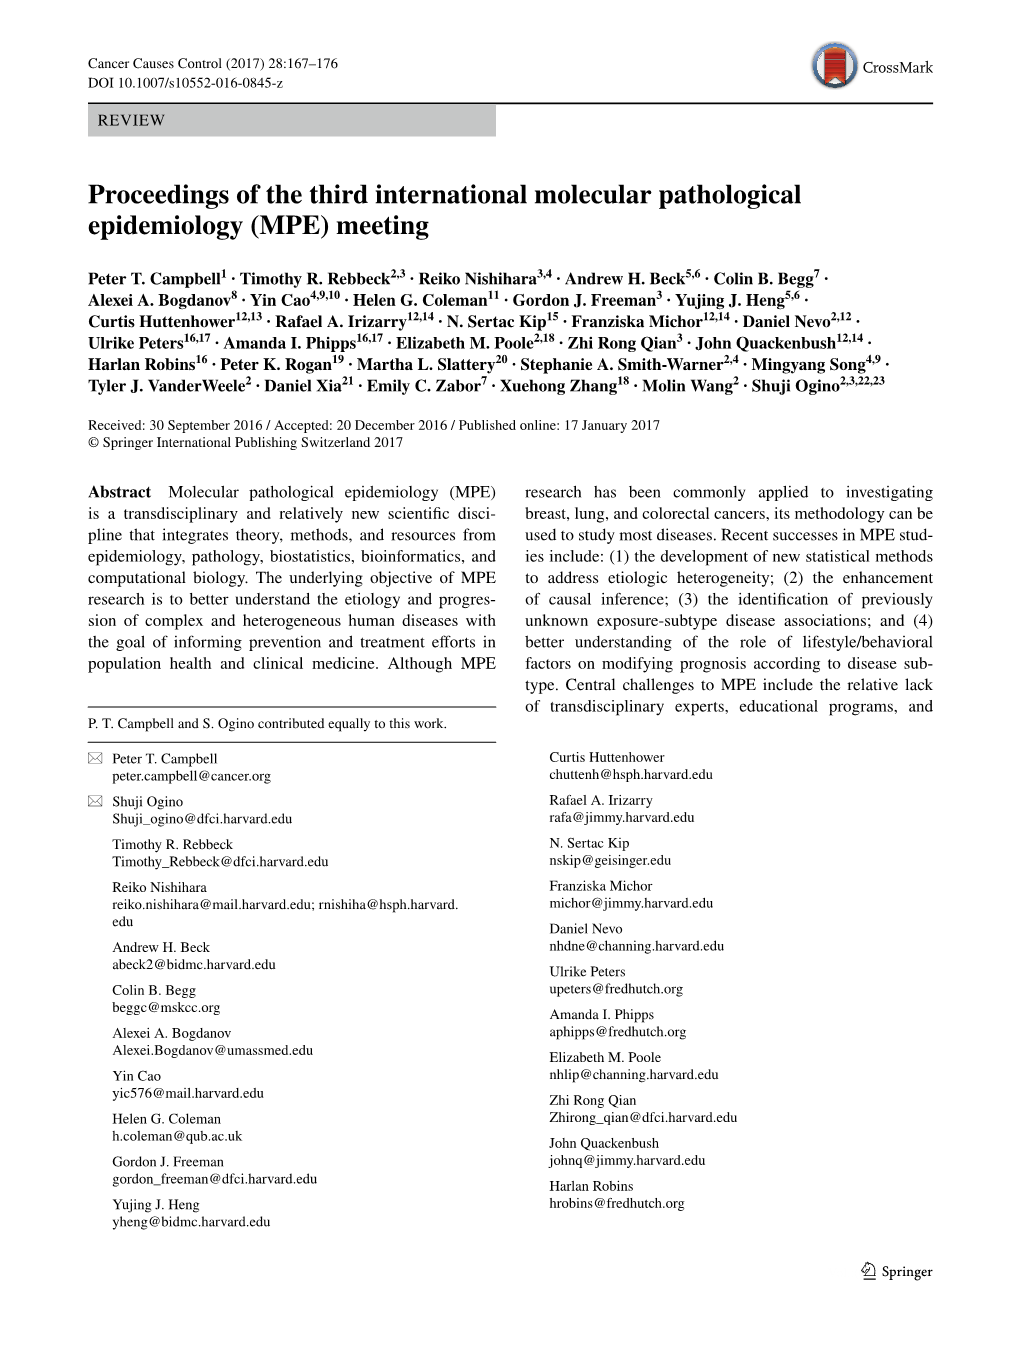 Proceedings of the Third International Molecular Pathological Epidemiology (MPE) Meeting